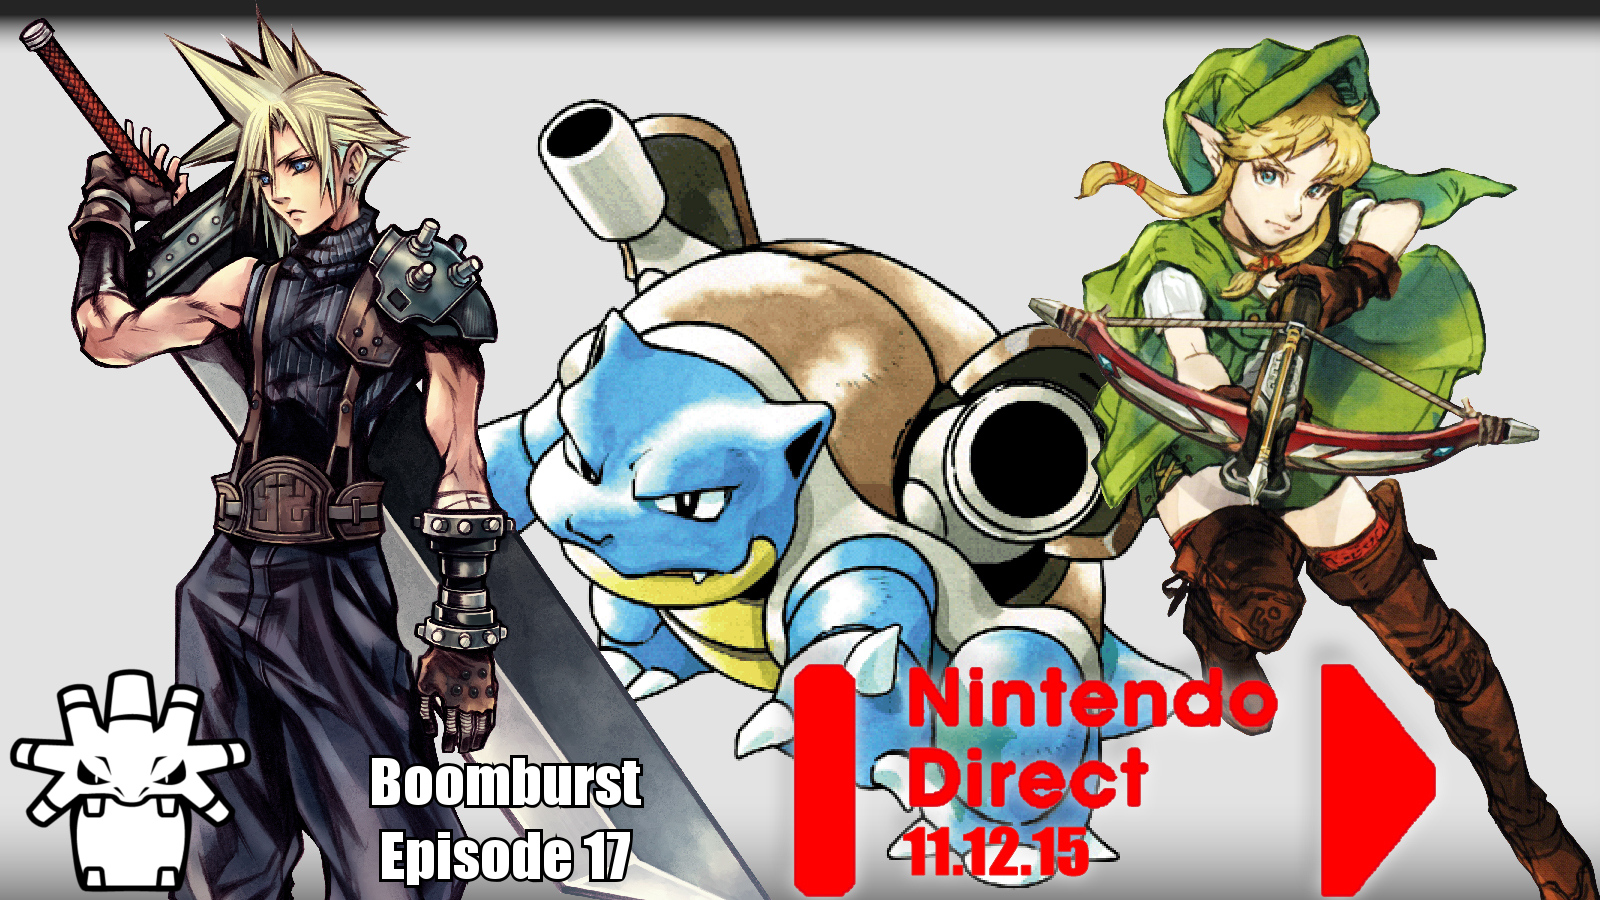 Episode 17: Nintendo Direct